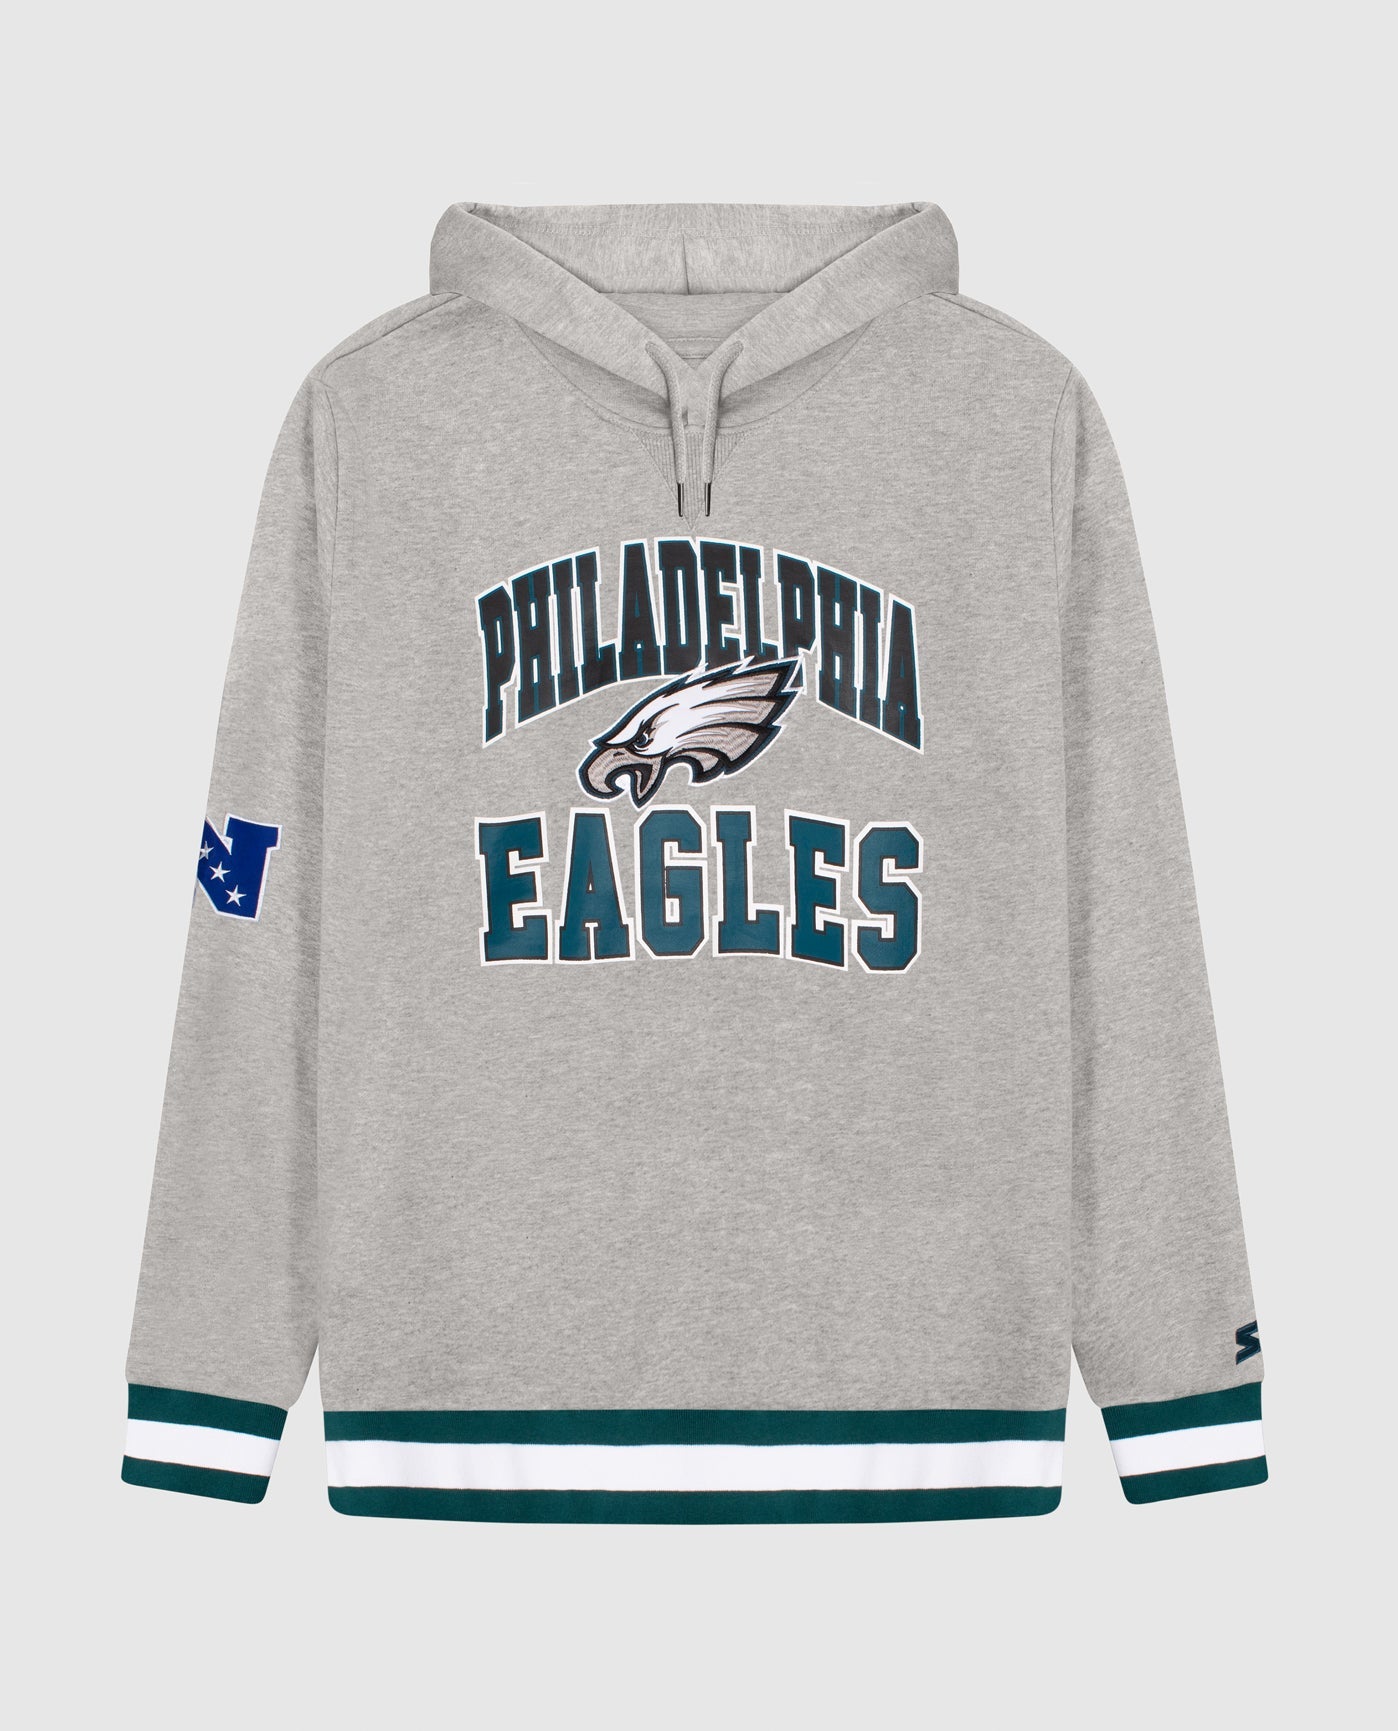 Philadelphia Eagles Starter Retro Pullover Hoodie - Black